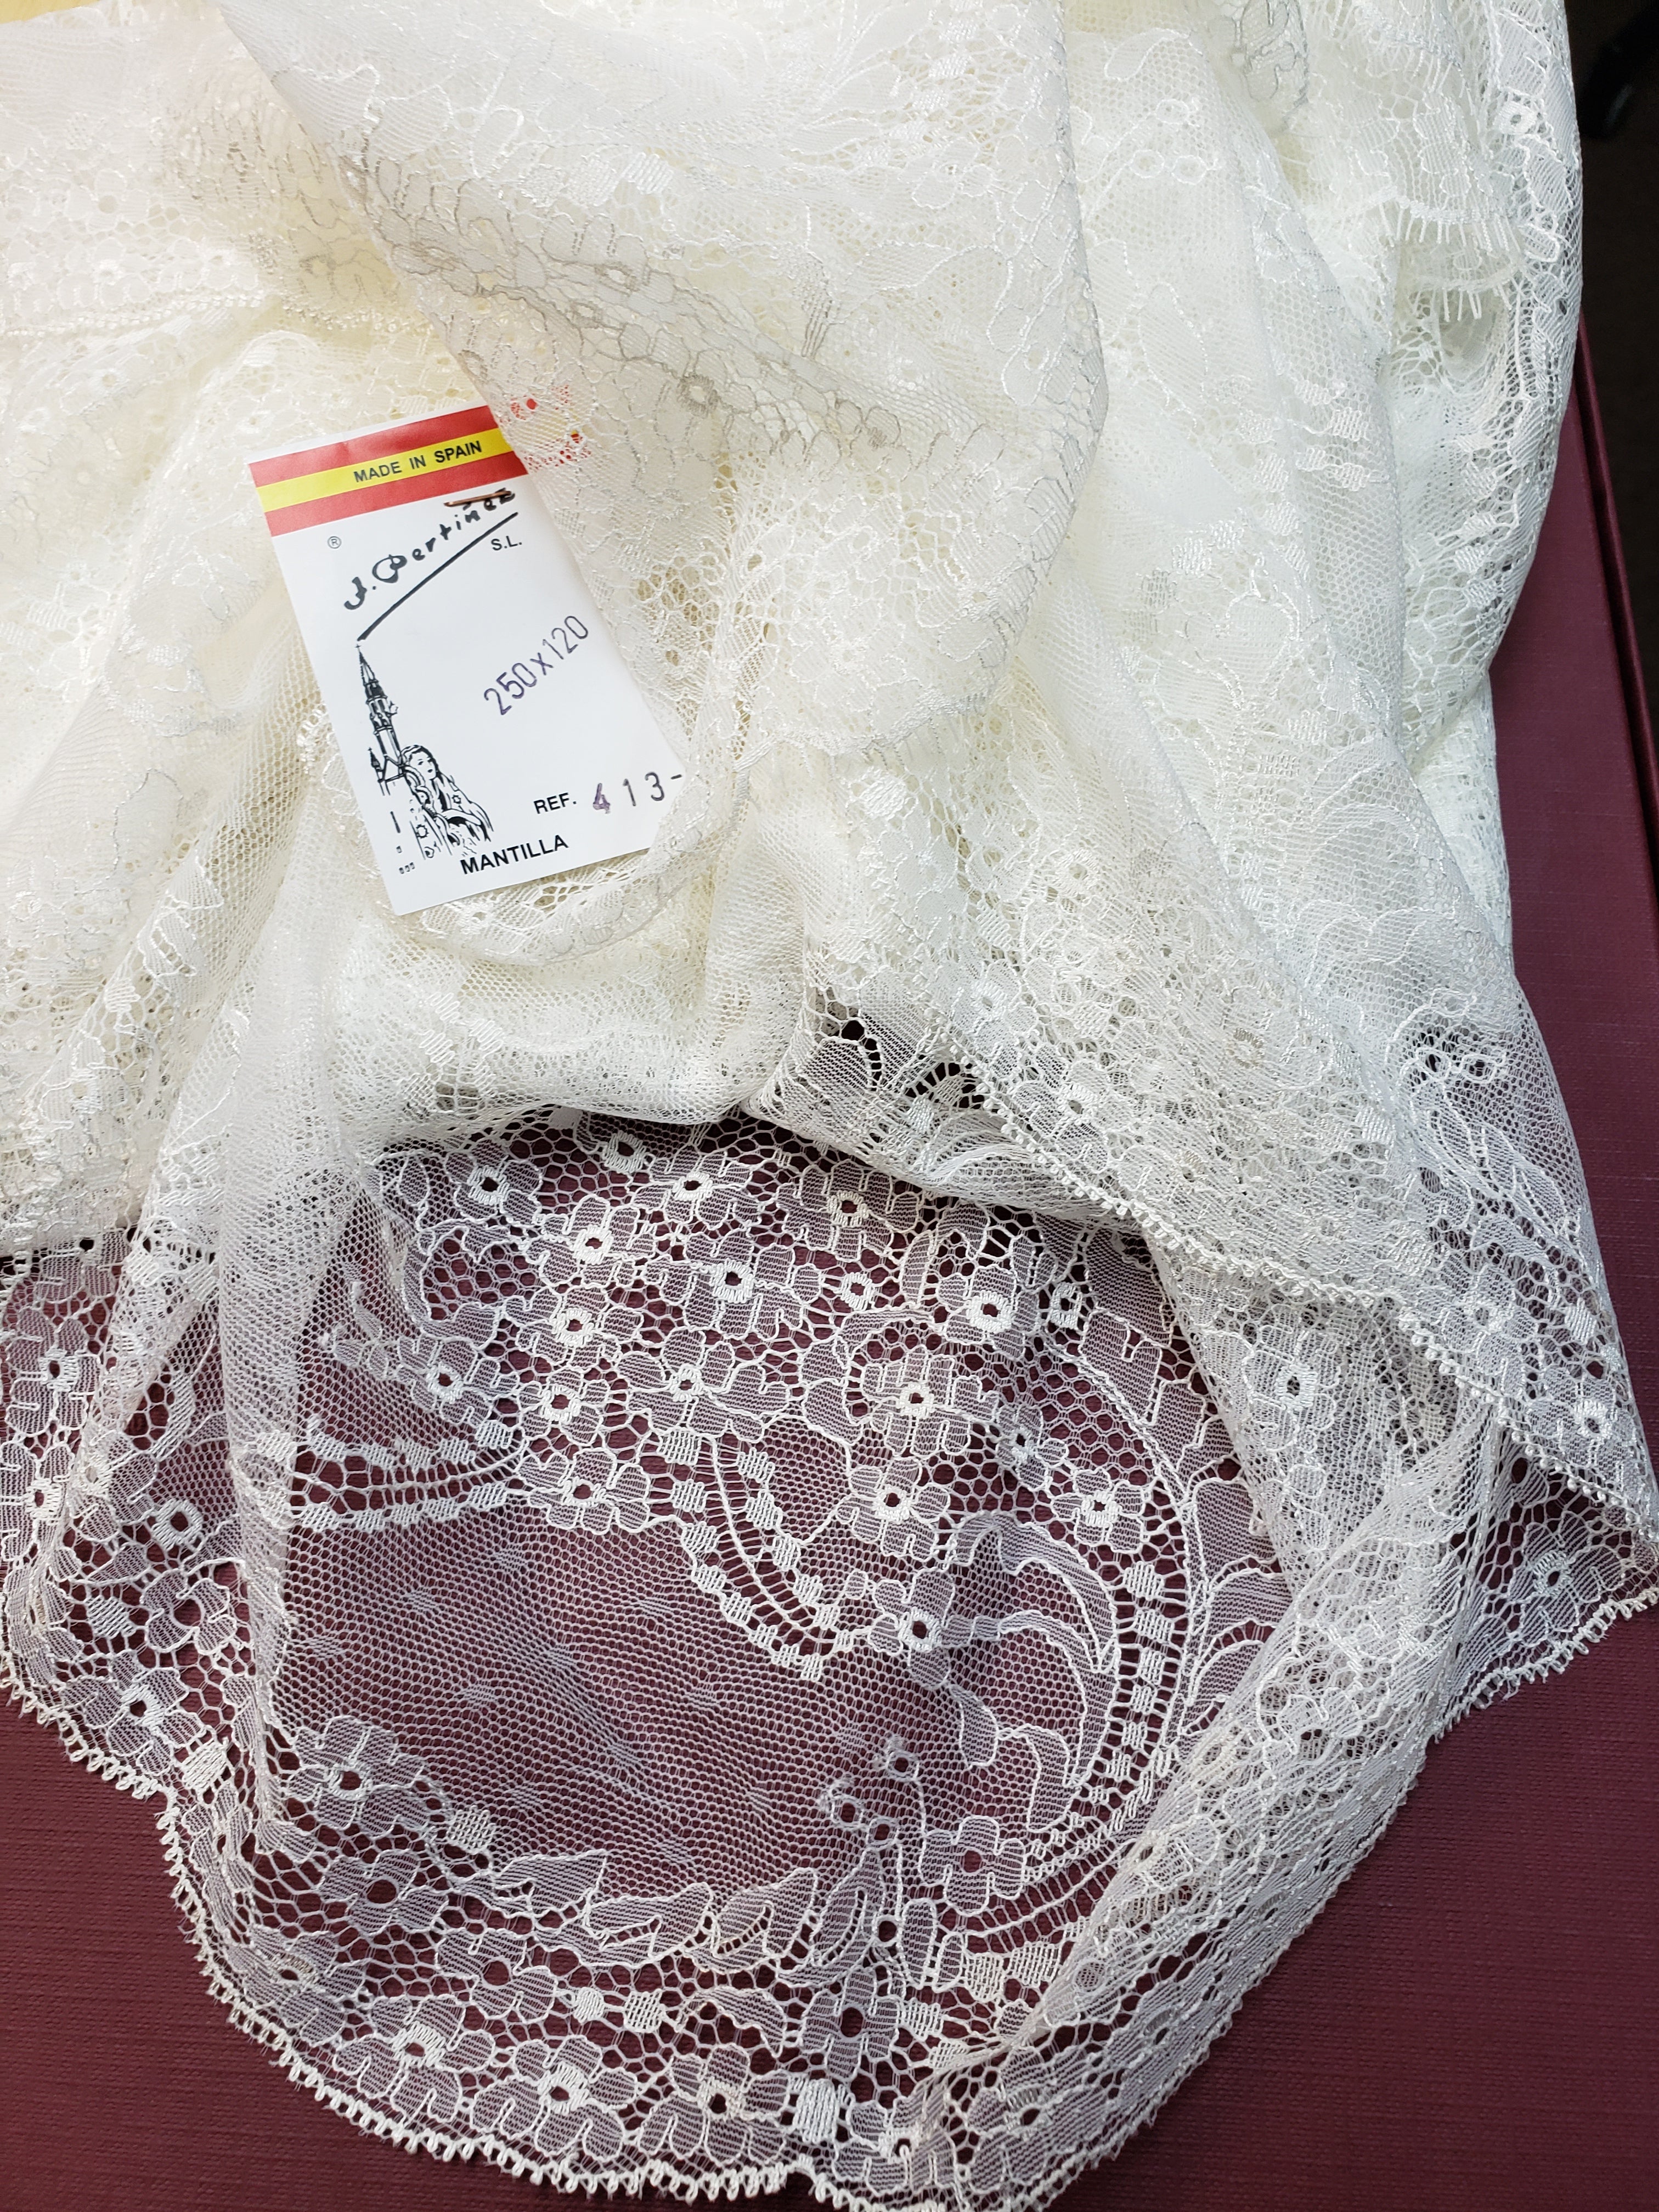 Spanish Wedding Veil 413 250/ Wedding Mantillas